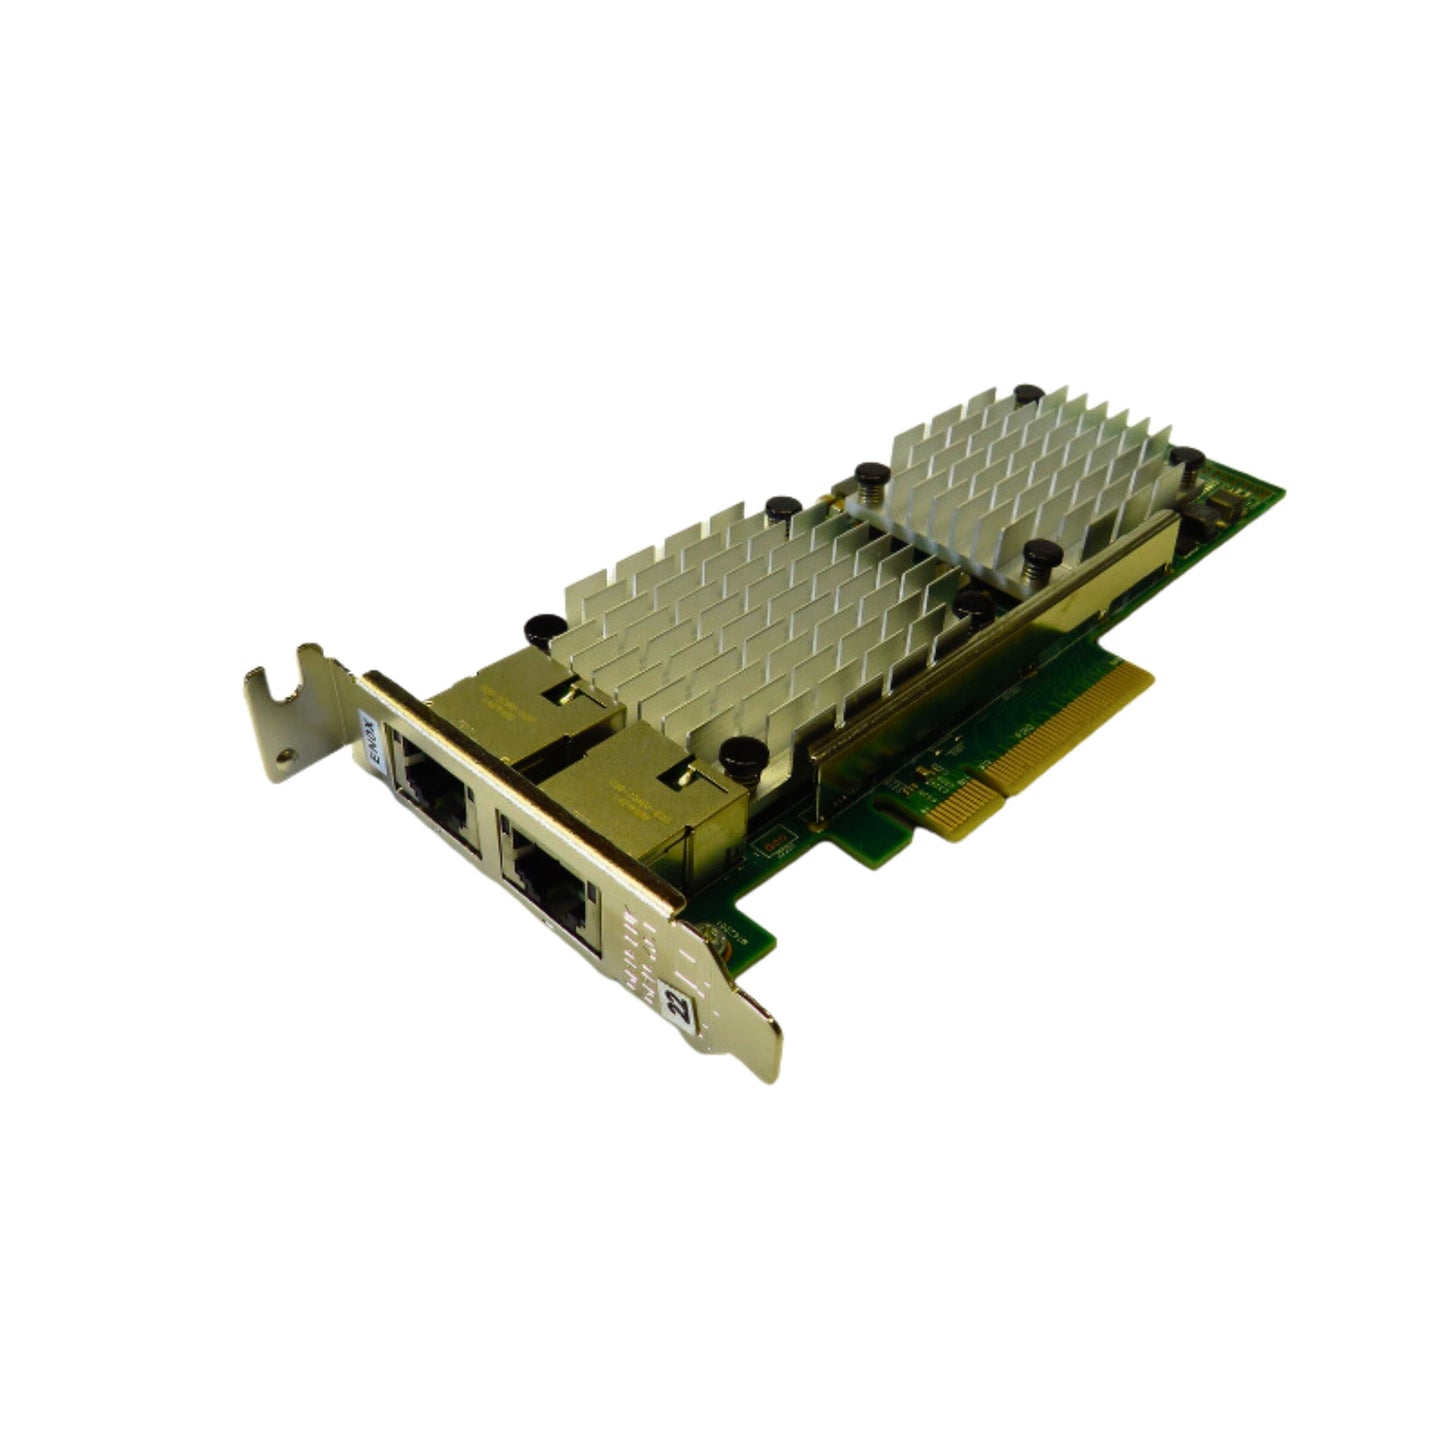 IBM 00E2864 EN0X 2CC4 PCIe2 2 Port 10GbE BaseT RJ45 Adapter Card (Refurbished)